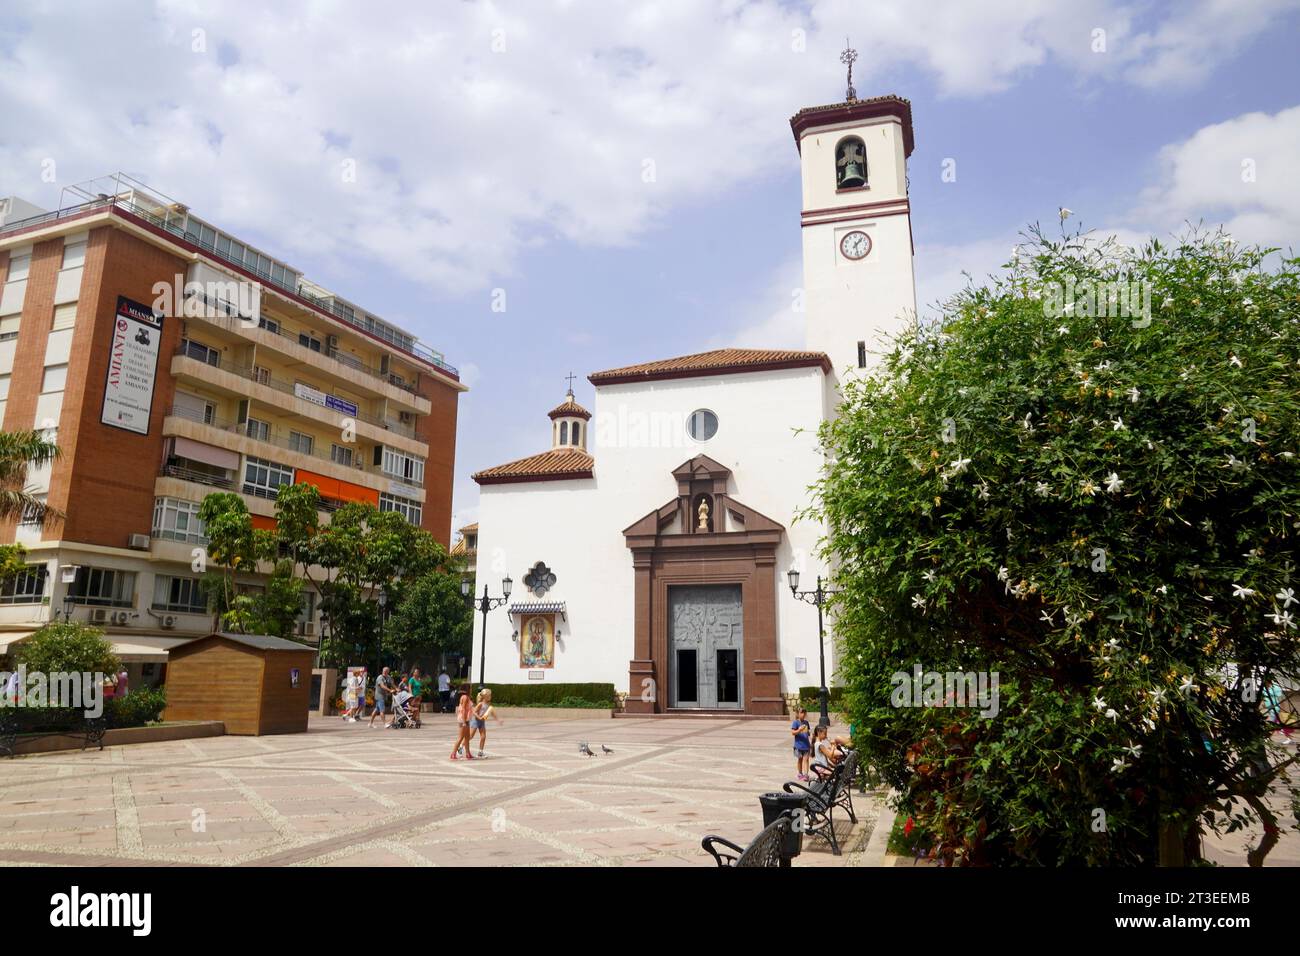 Spain, Andalusia, Fuengirola: Church of Parroquia de Nuestra Senora del Rosario in “Plaza de la Constitution” square Stock Photo